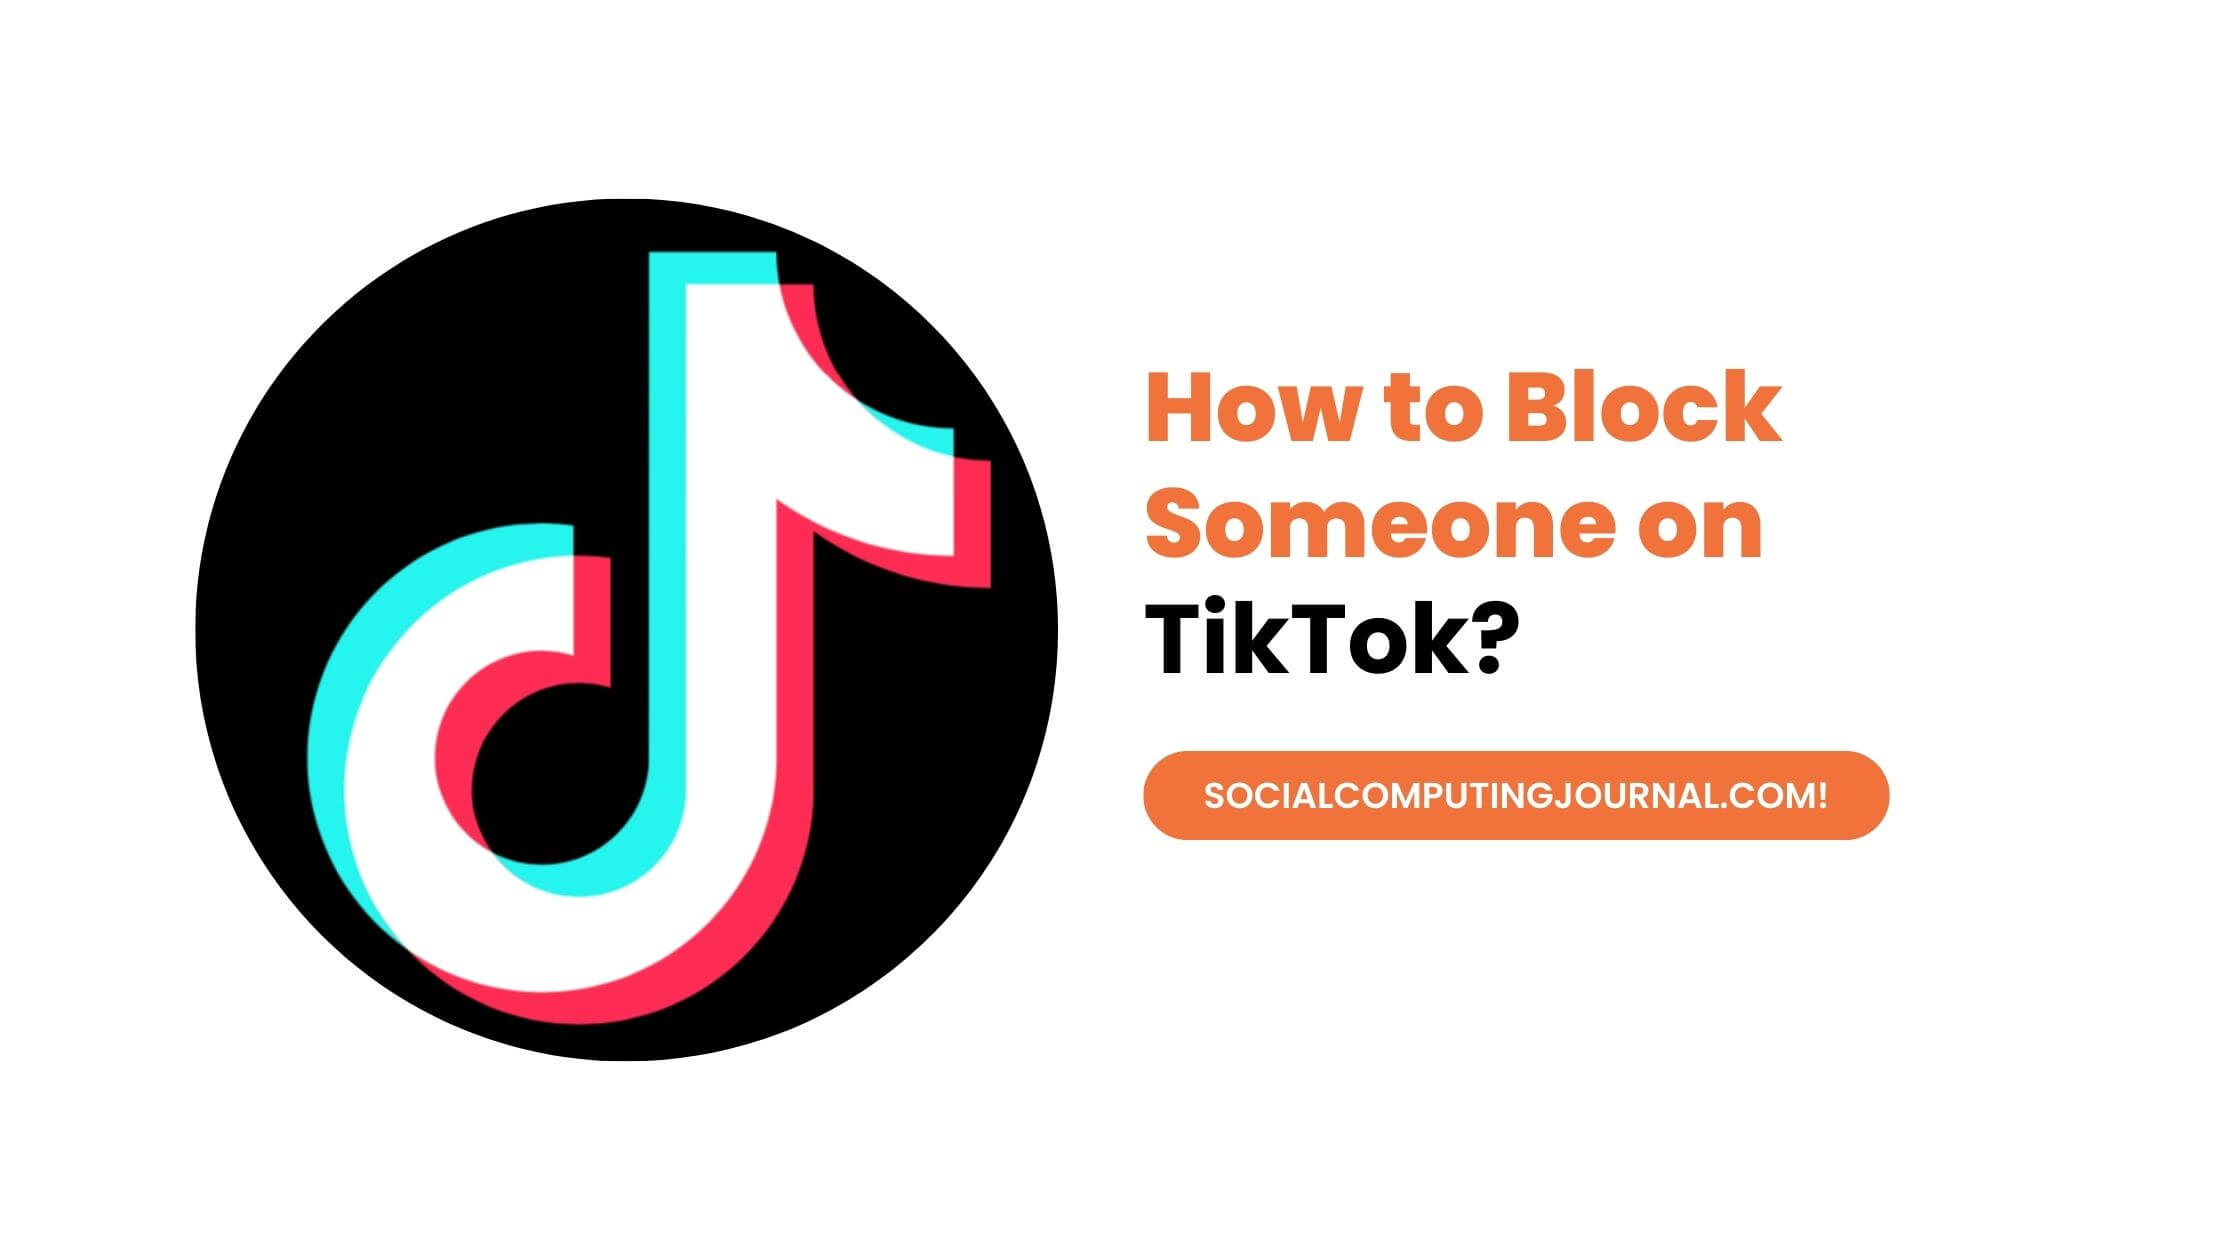 How to Block Someone on TikTok